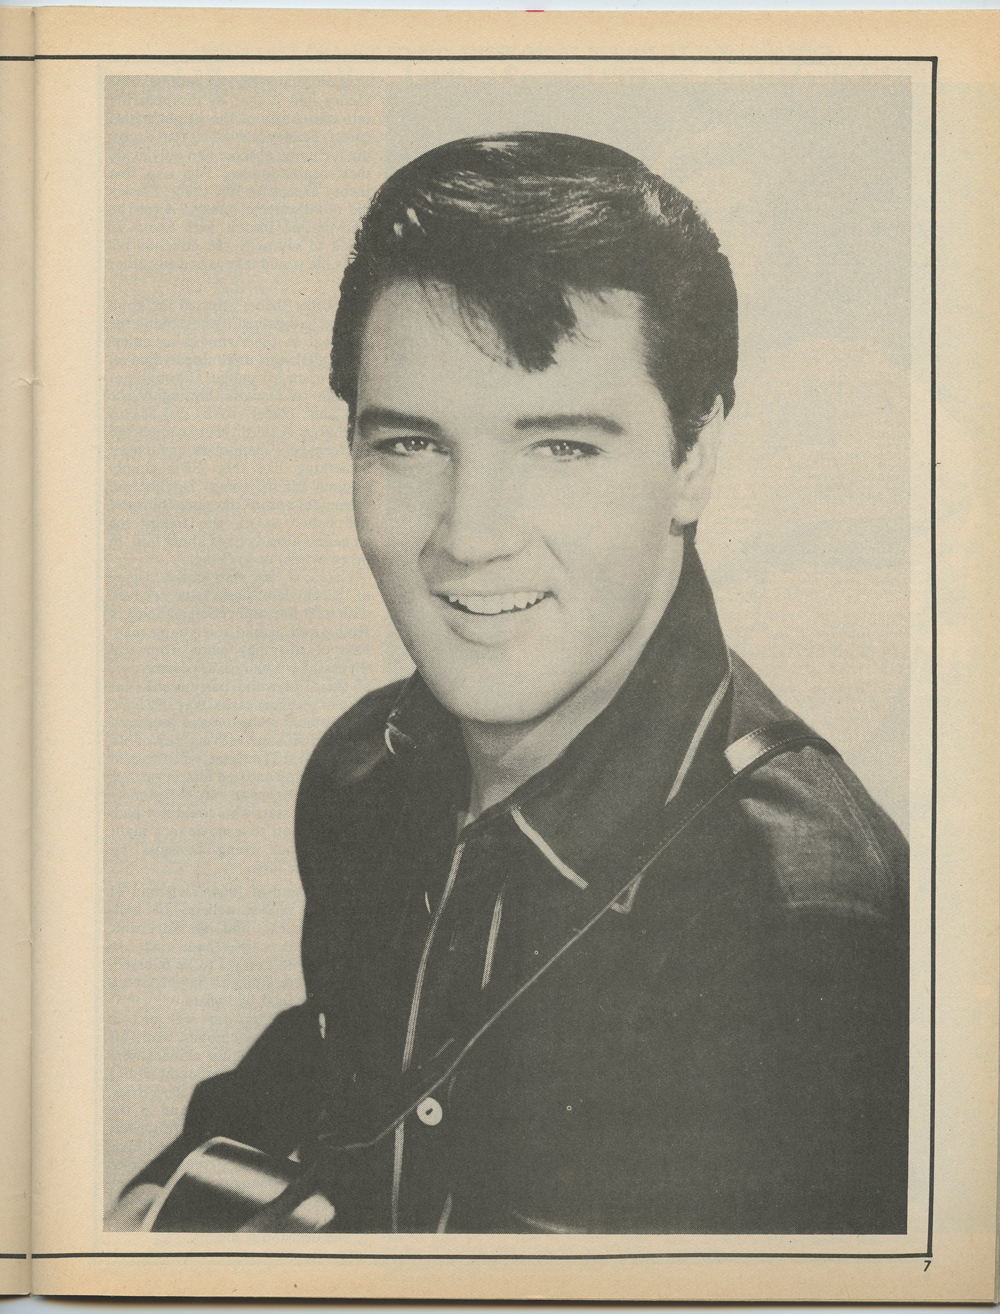 Elvis Presley Magazine Back Issue 1977 Song Hits Magazine's Tribute To Elvis